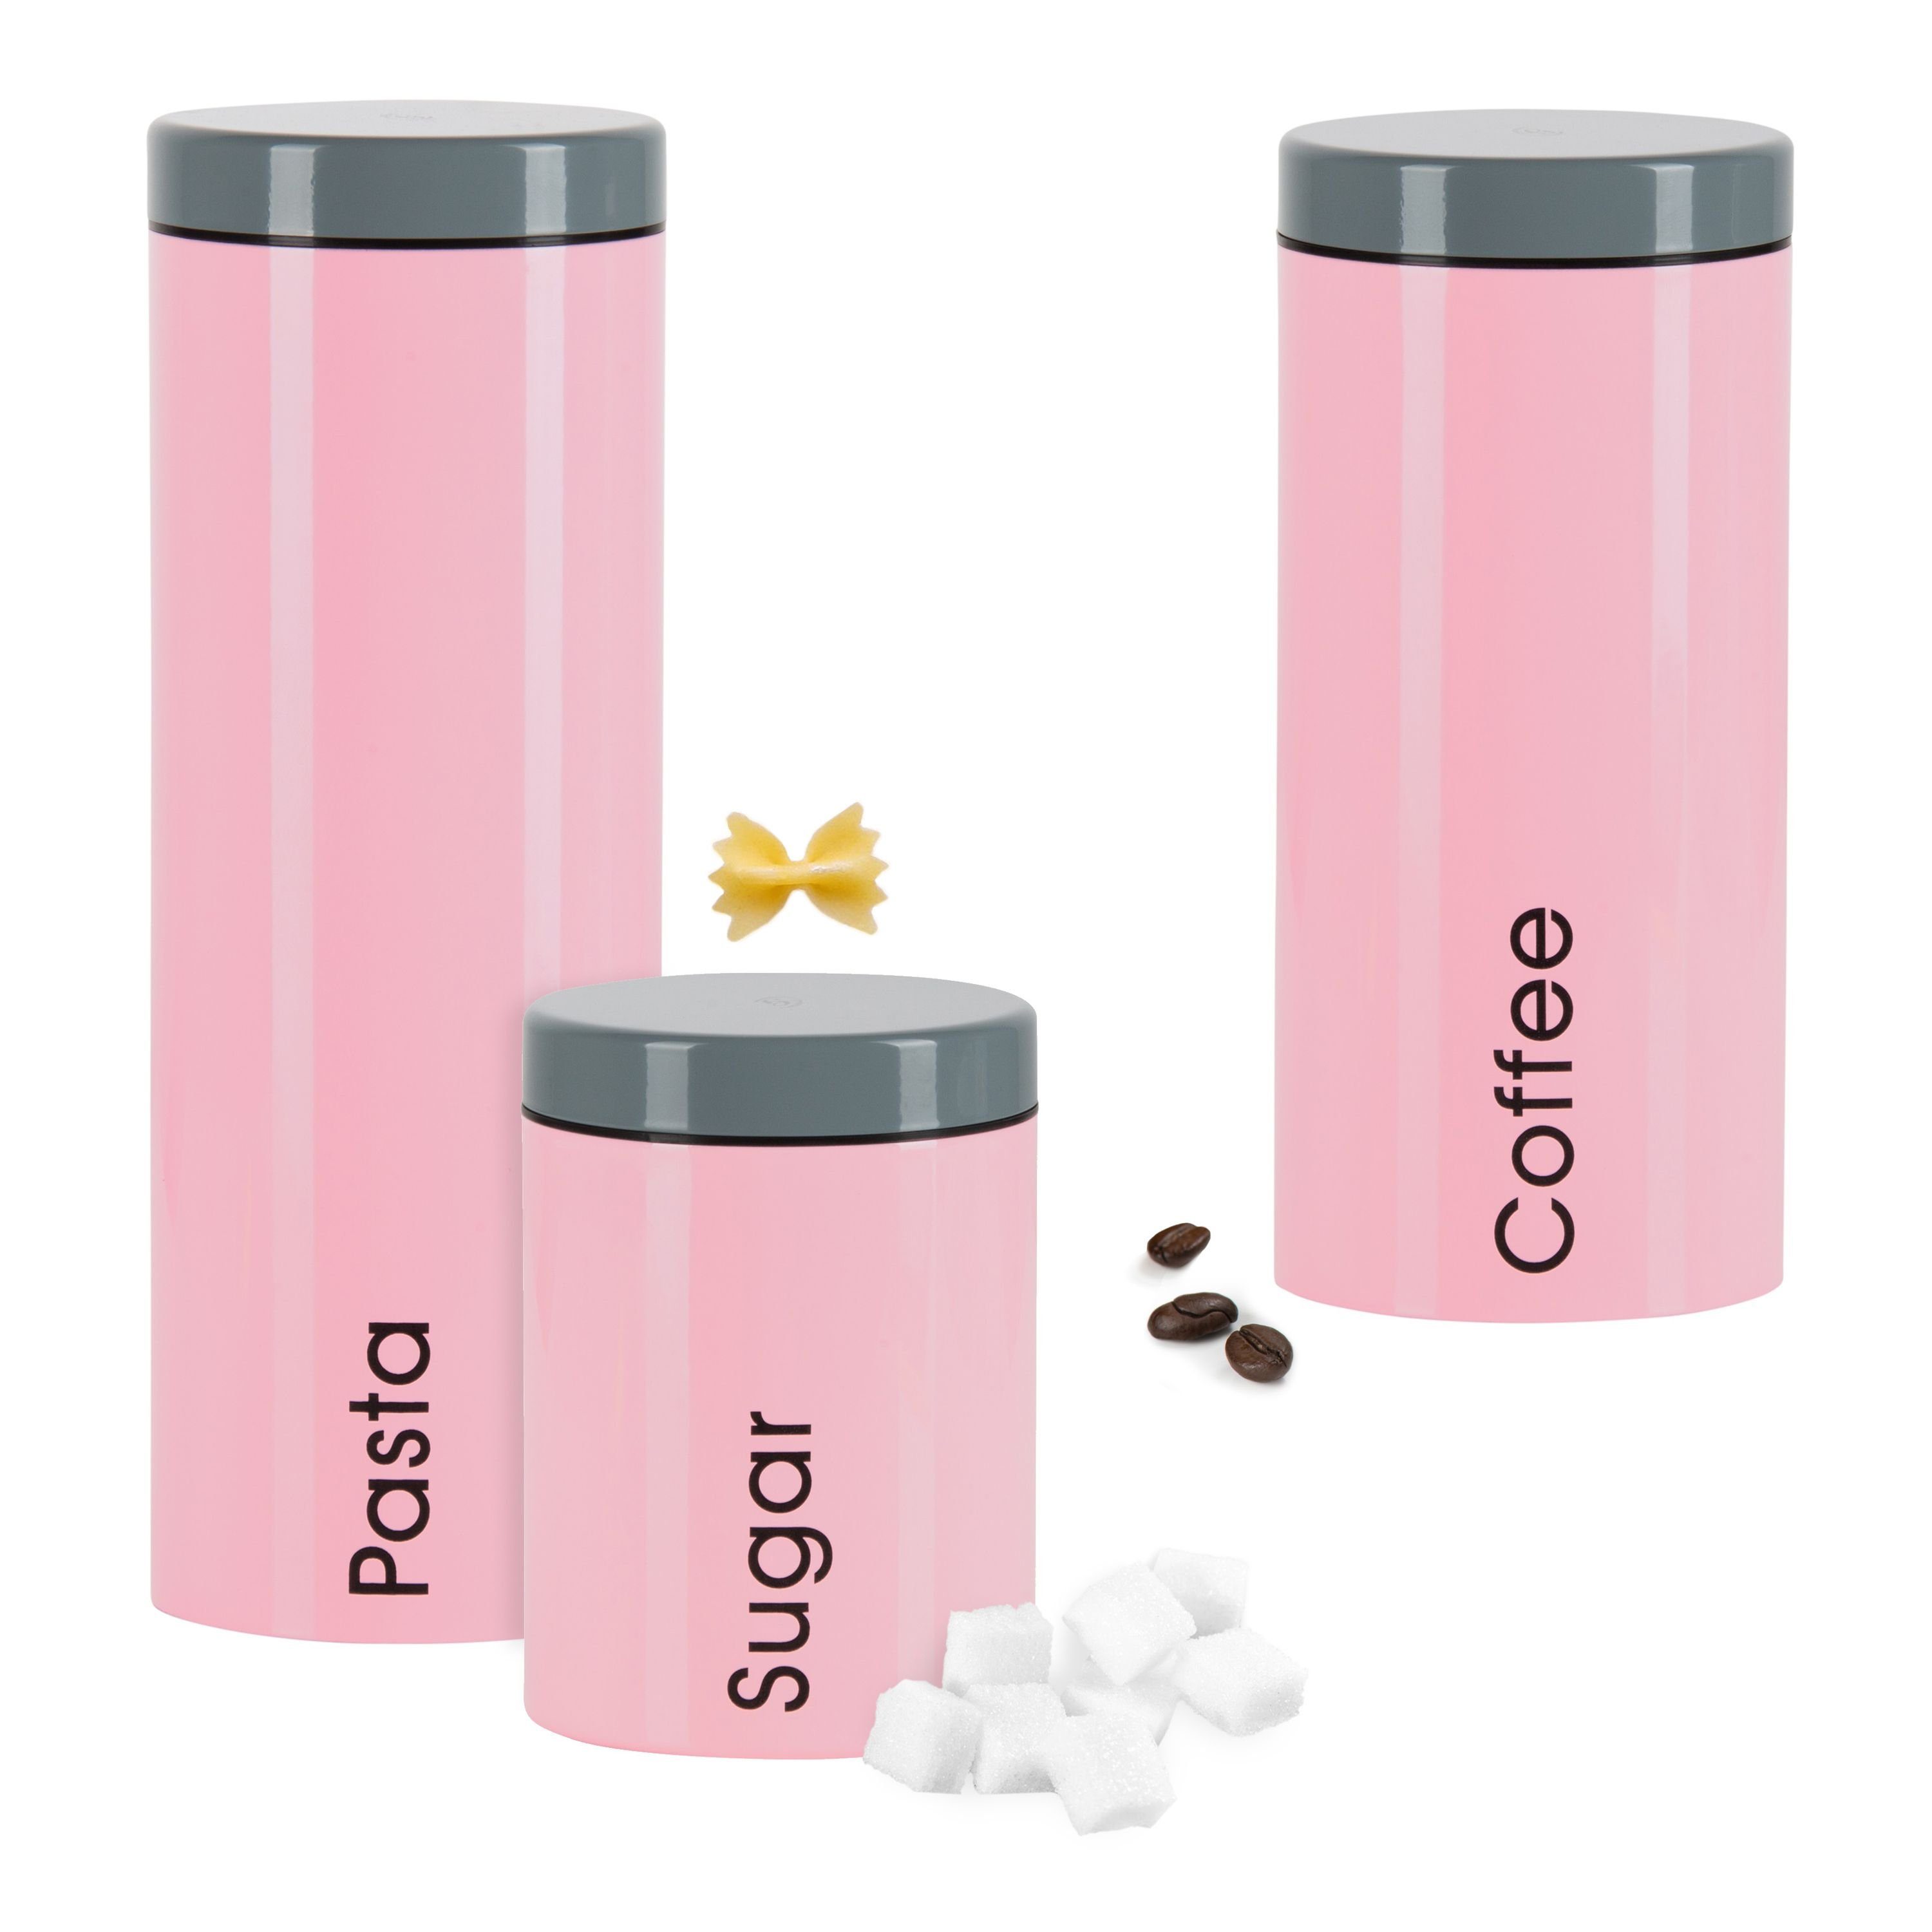 Genius Vorratsglas 3er Set Vorratsdosen Genius: Pasta + Coffee + Sugar, Metall Pink | Vorratsgläser